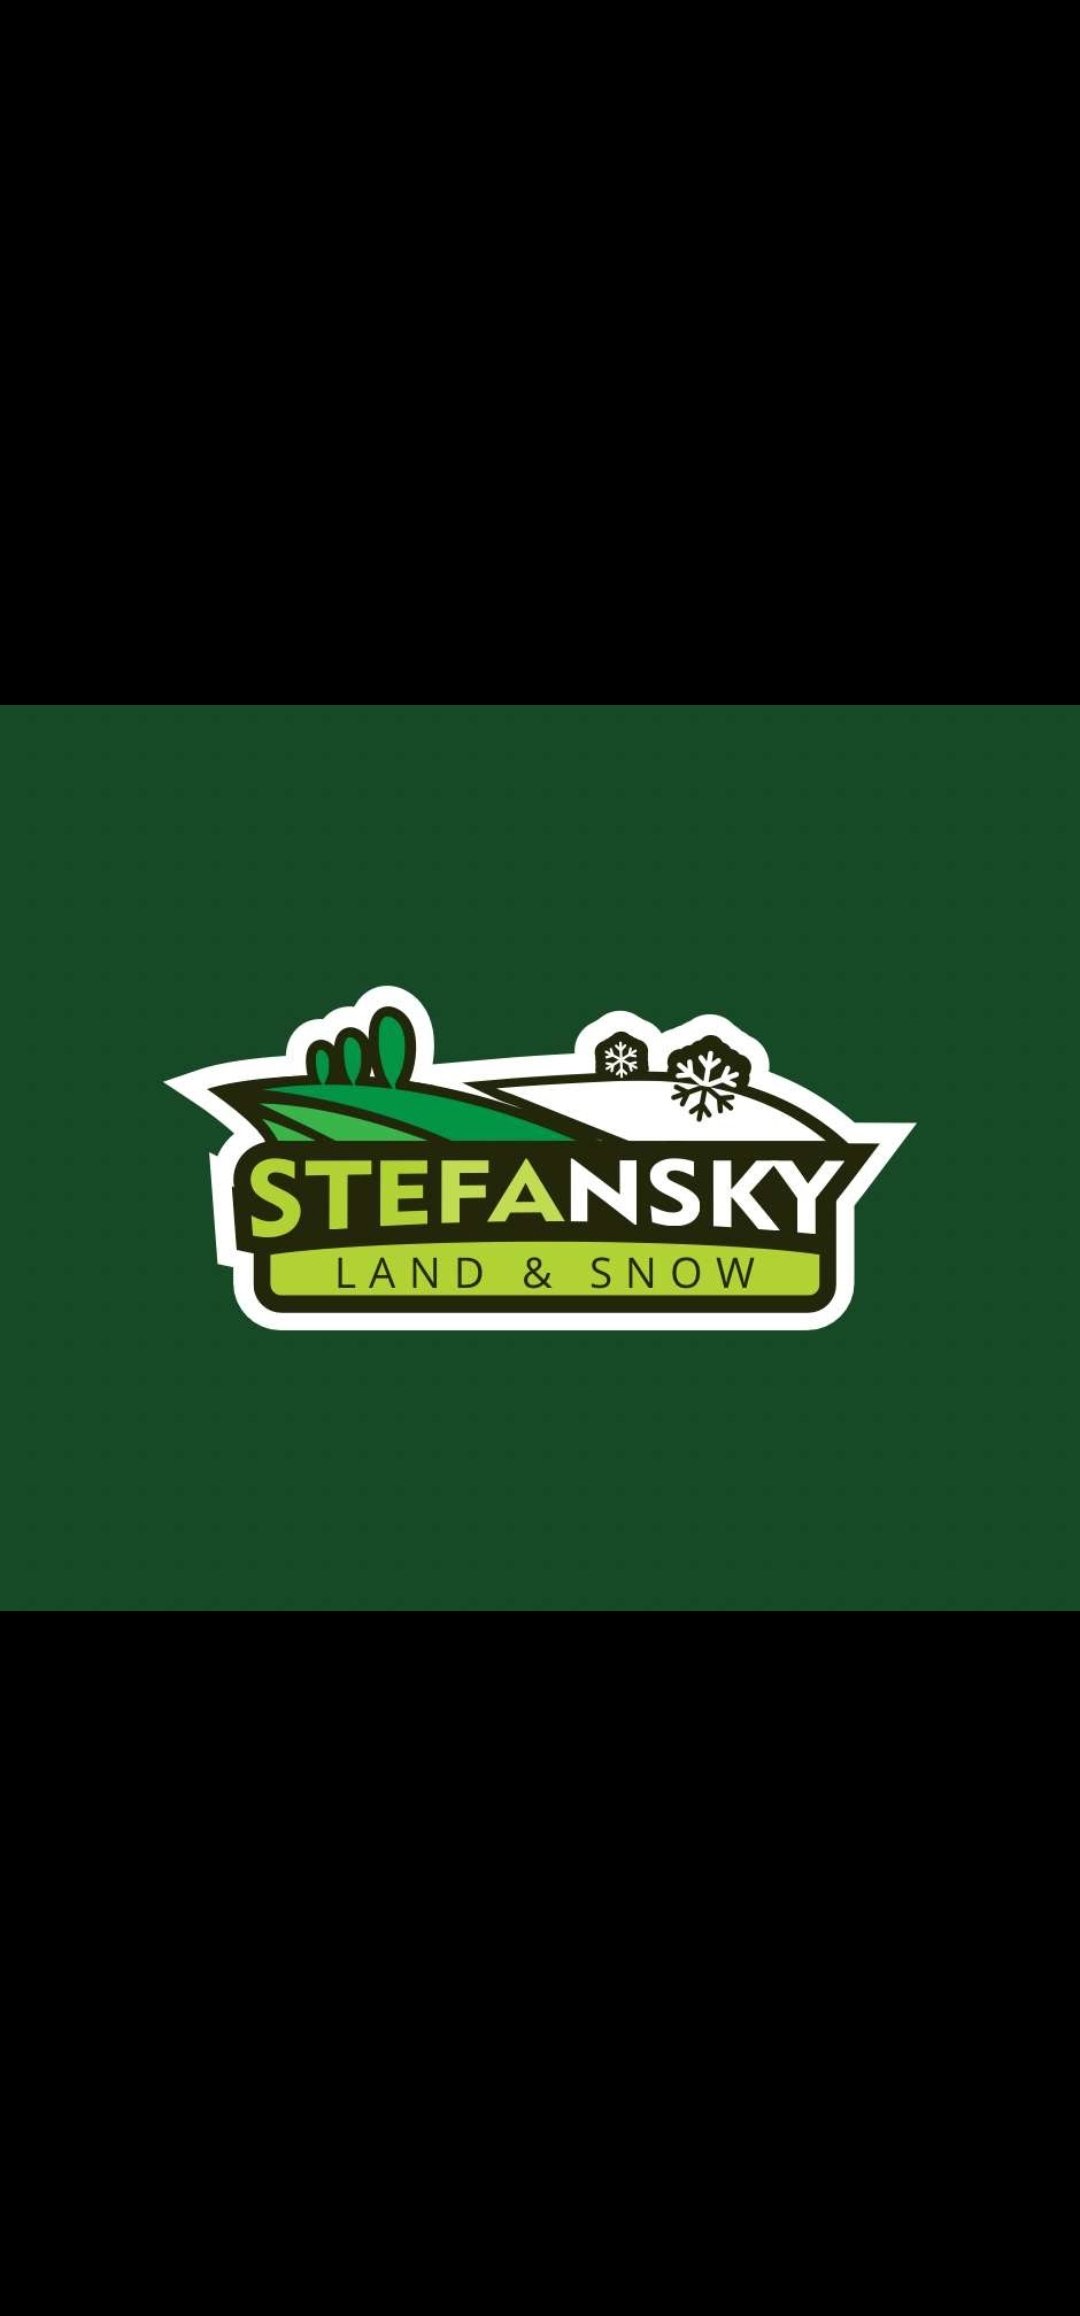 Stefansky Land & Snow Logo